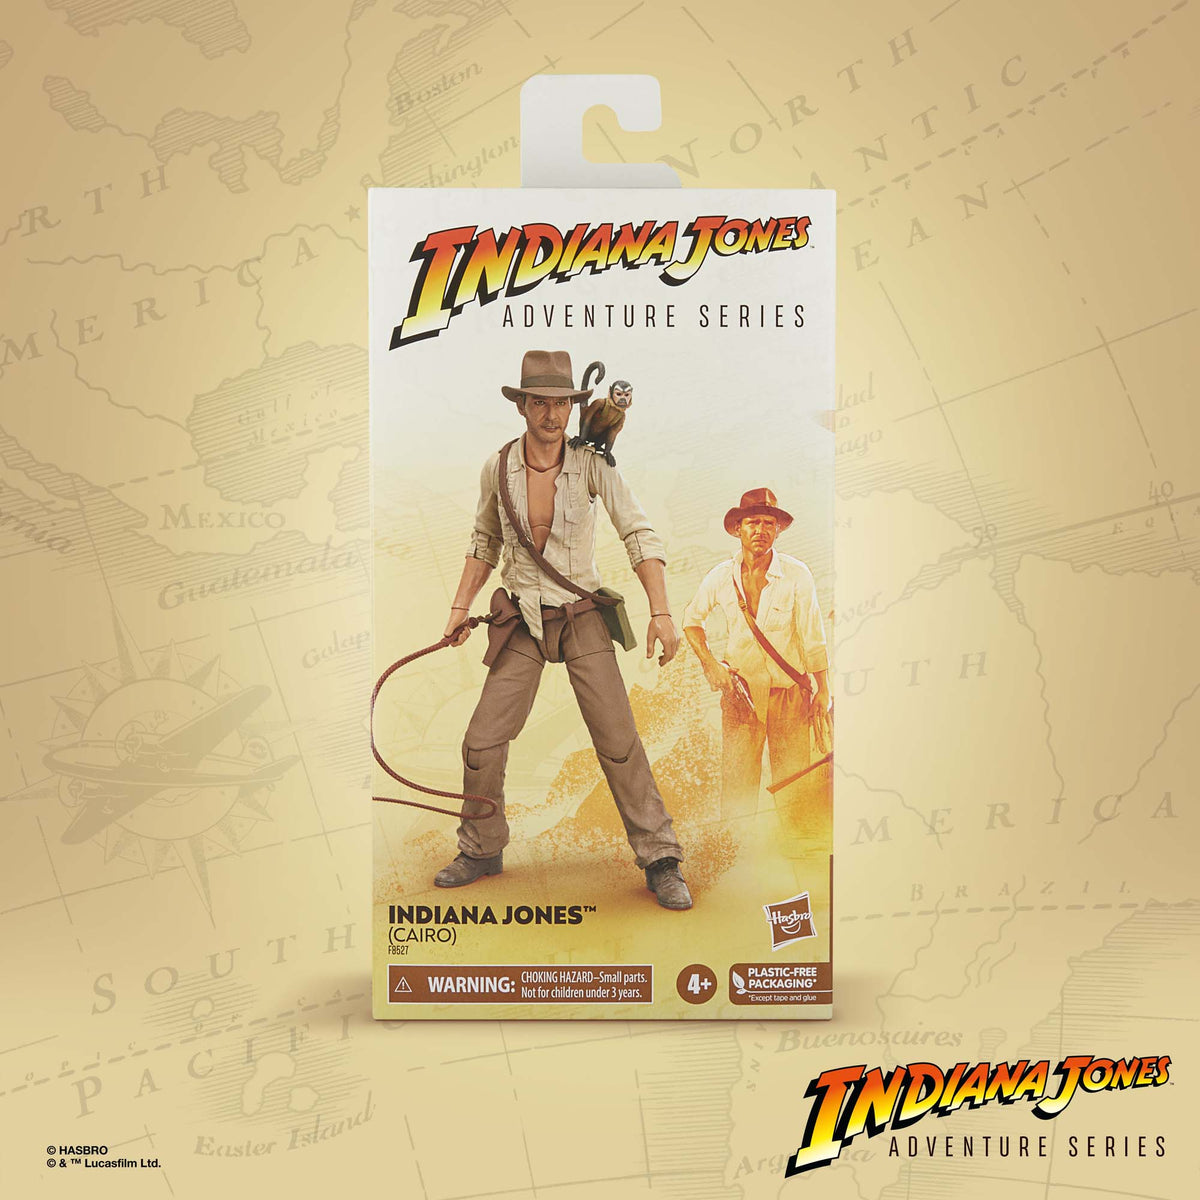 Indiana Jones Adventure Series Indiana Jones (Cairo) – Hasbro Pulse